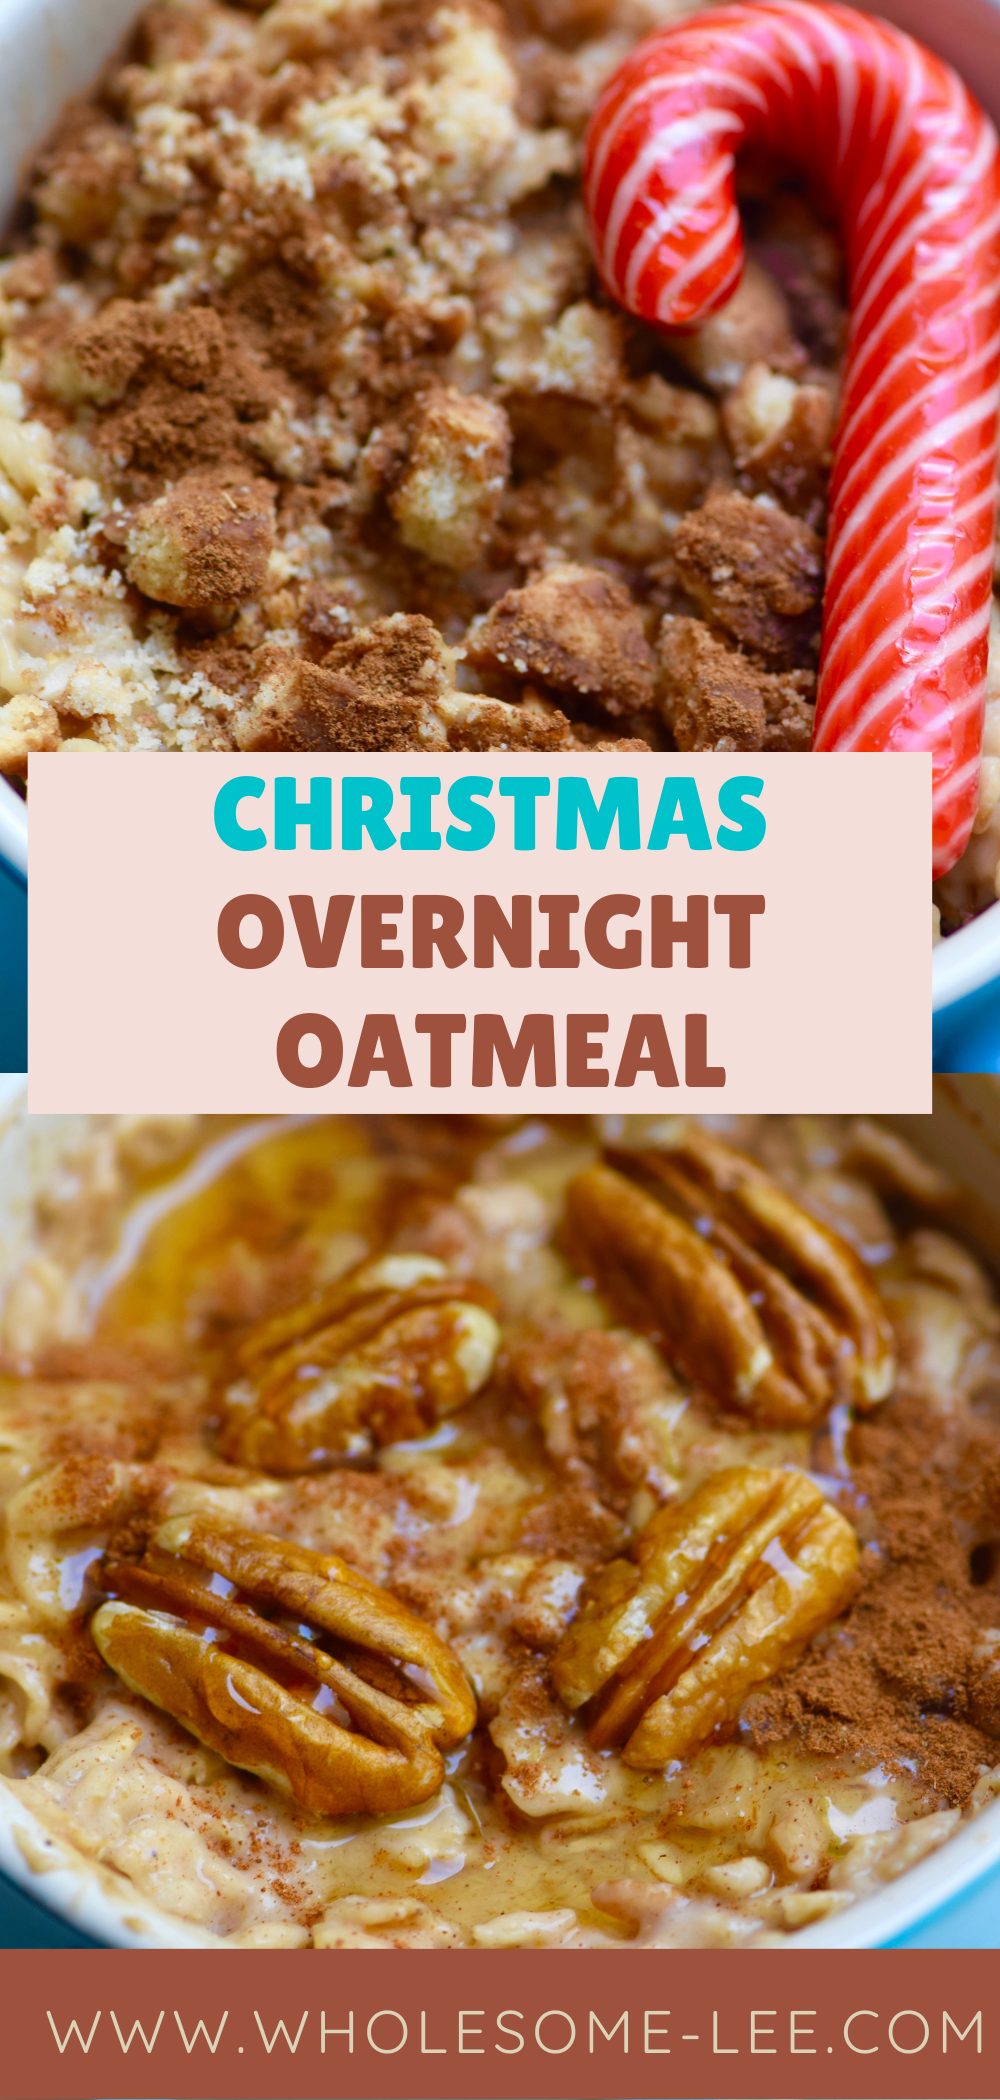 Christmas overnight oatmeal